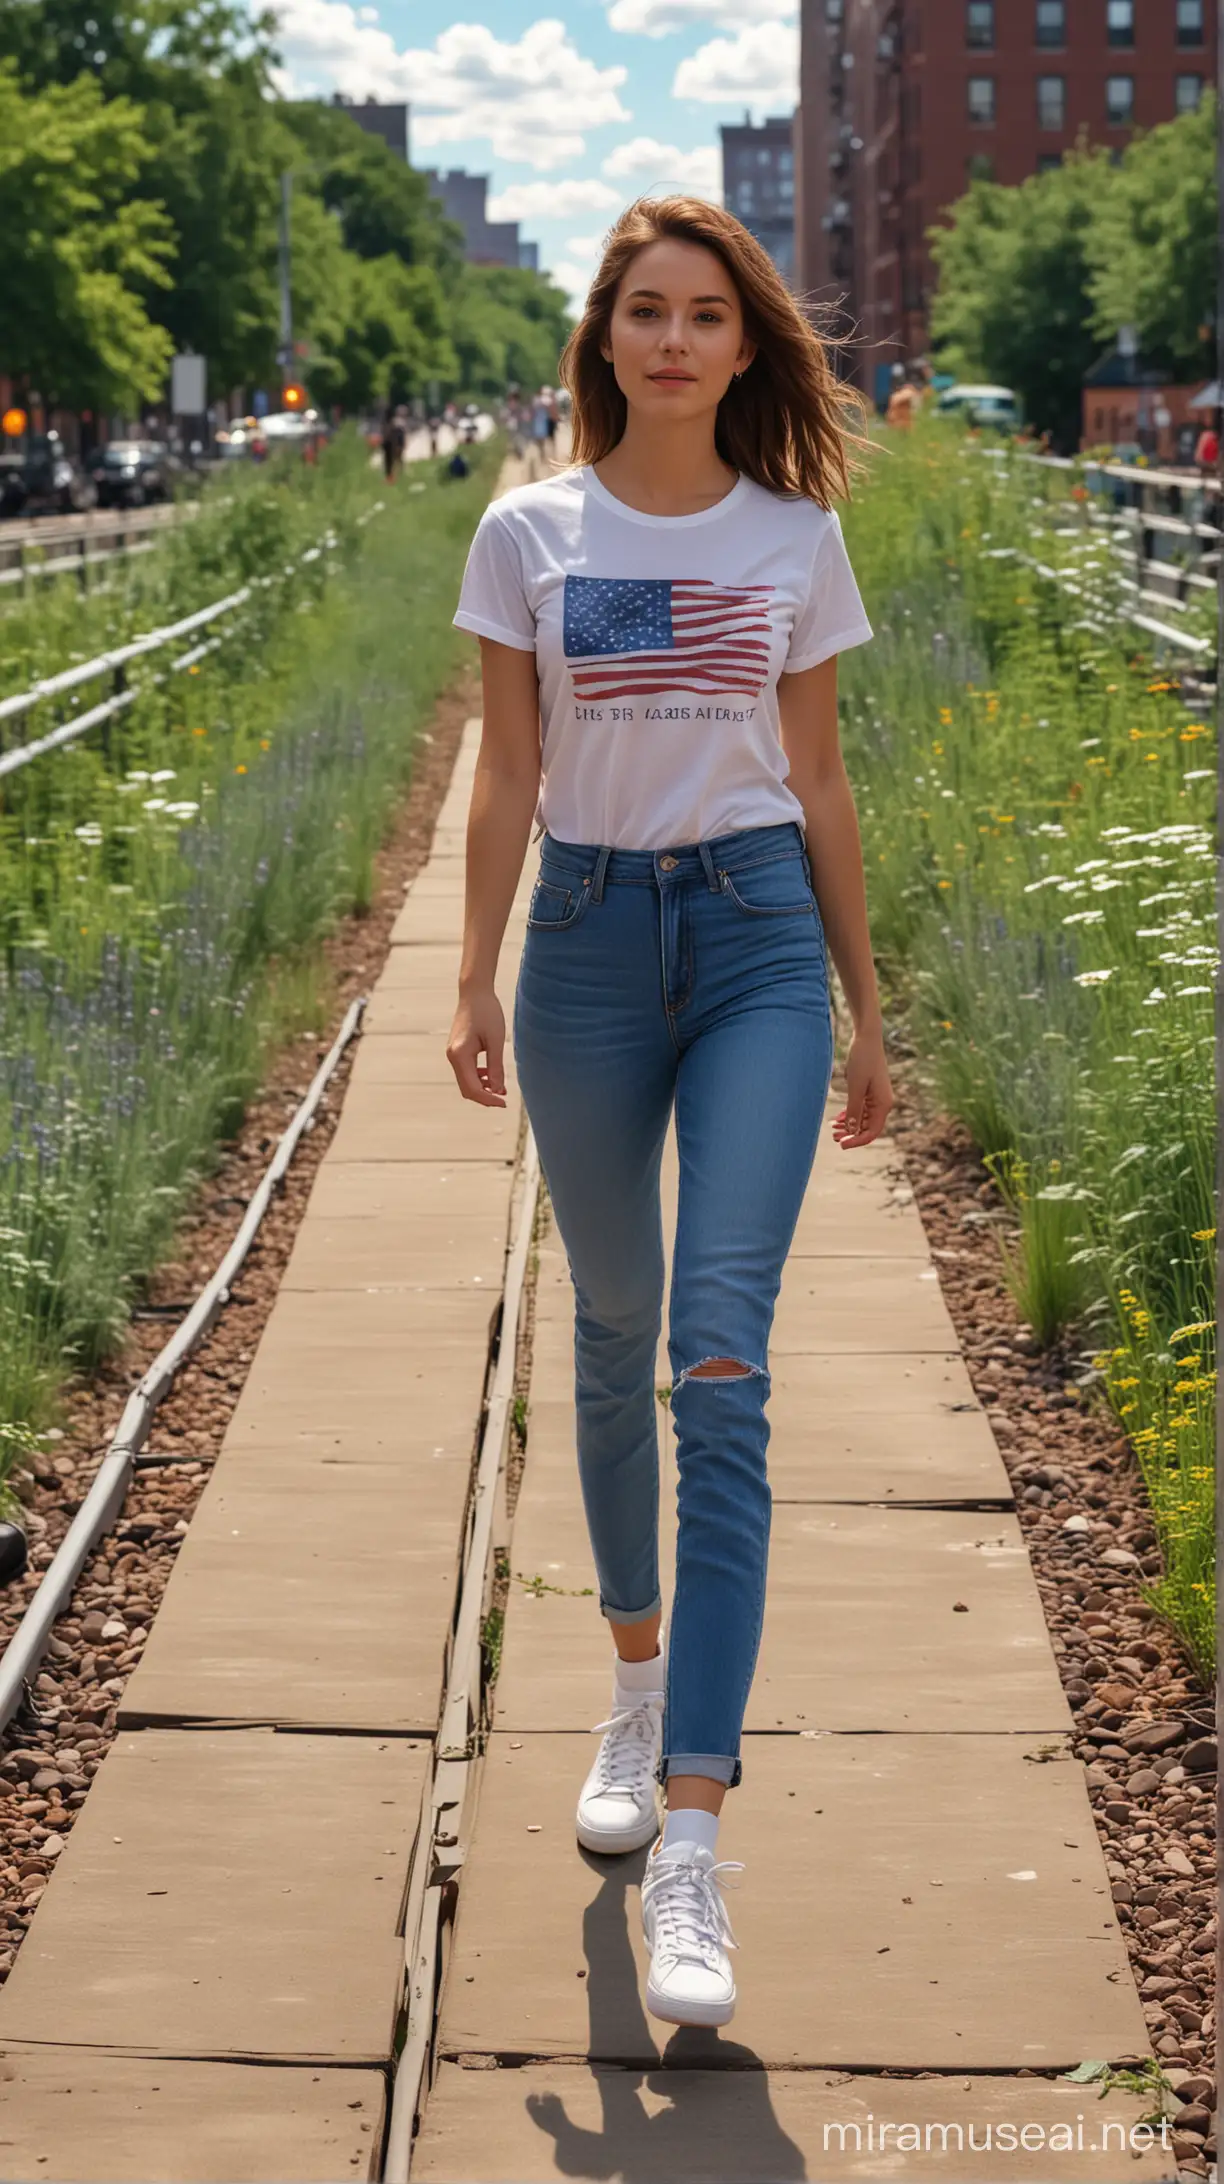 Beautiful USA Girl Strolling Through the High Line